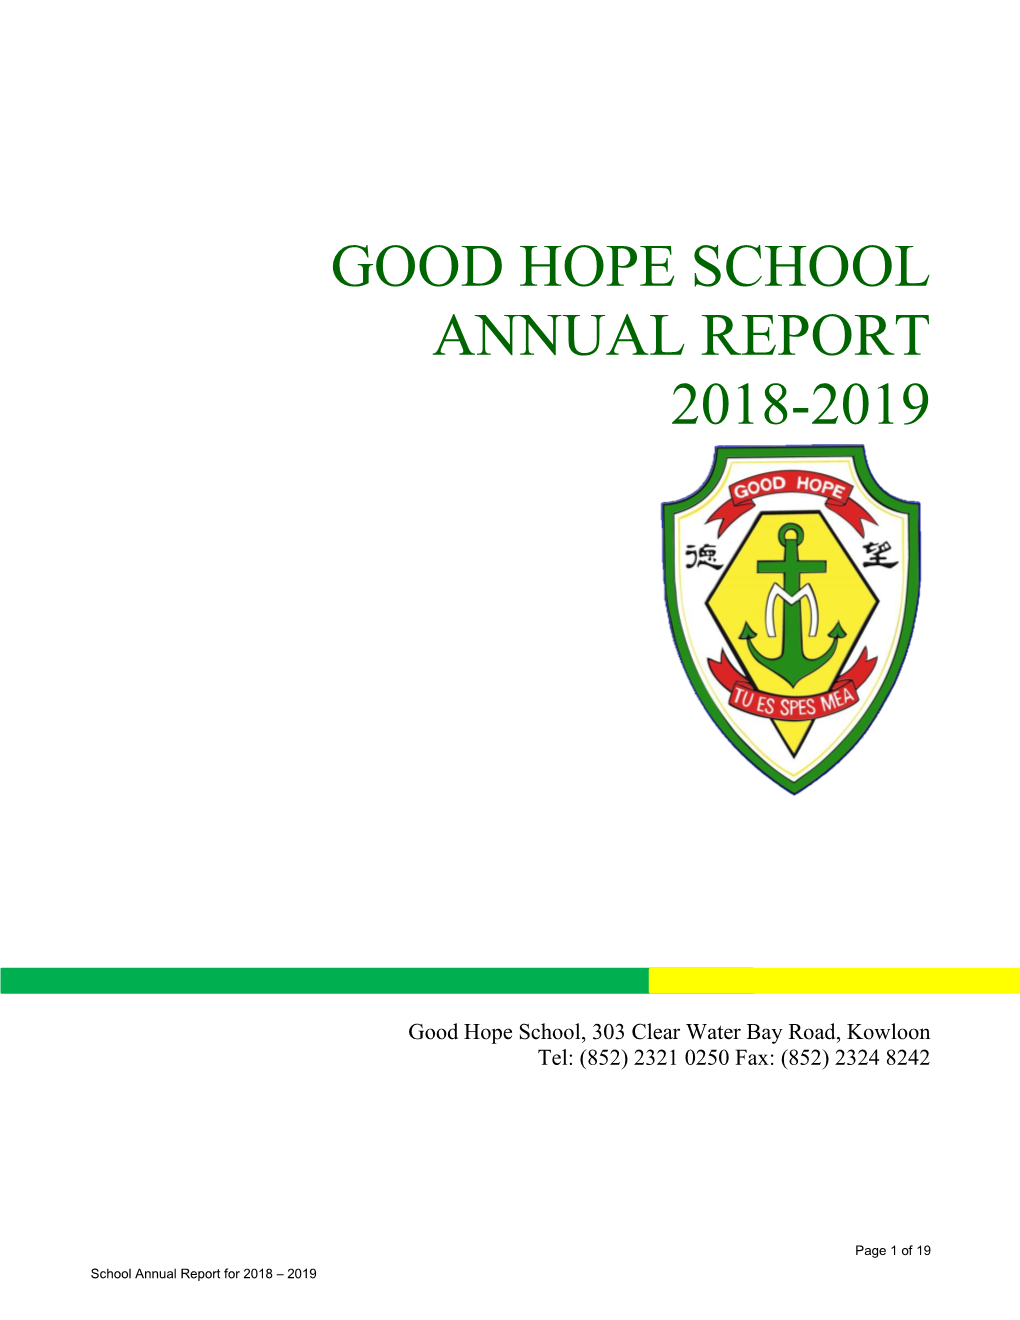 Good Hope School Annual Report 2018-2019